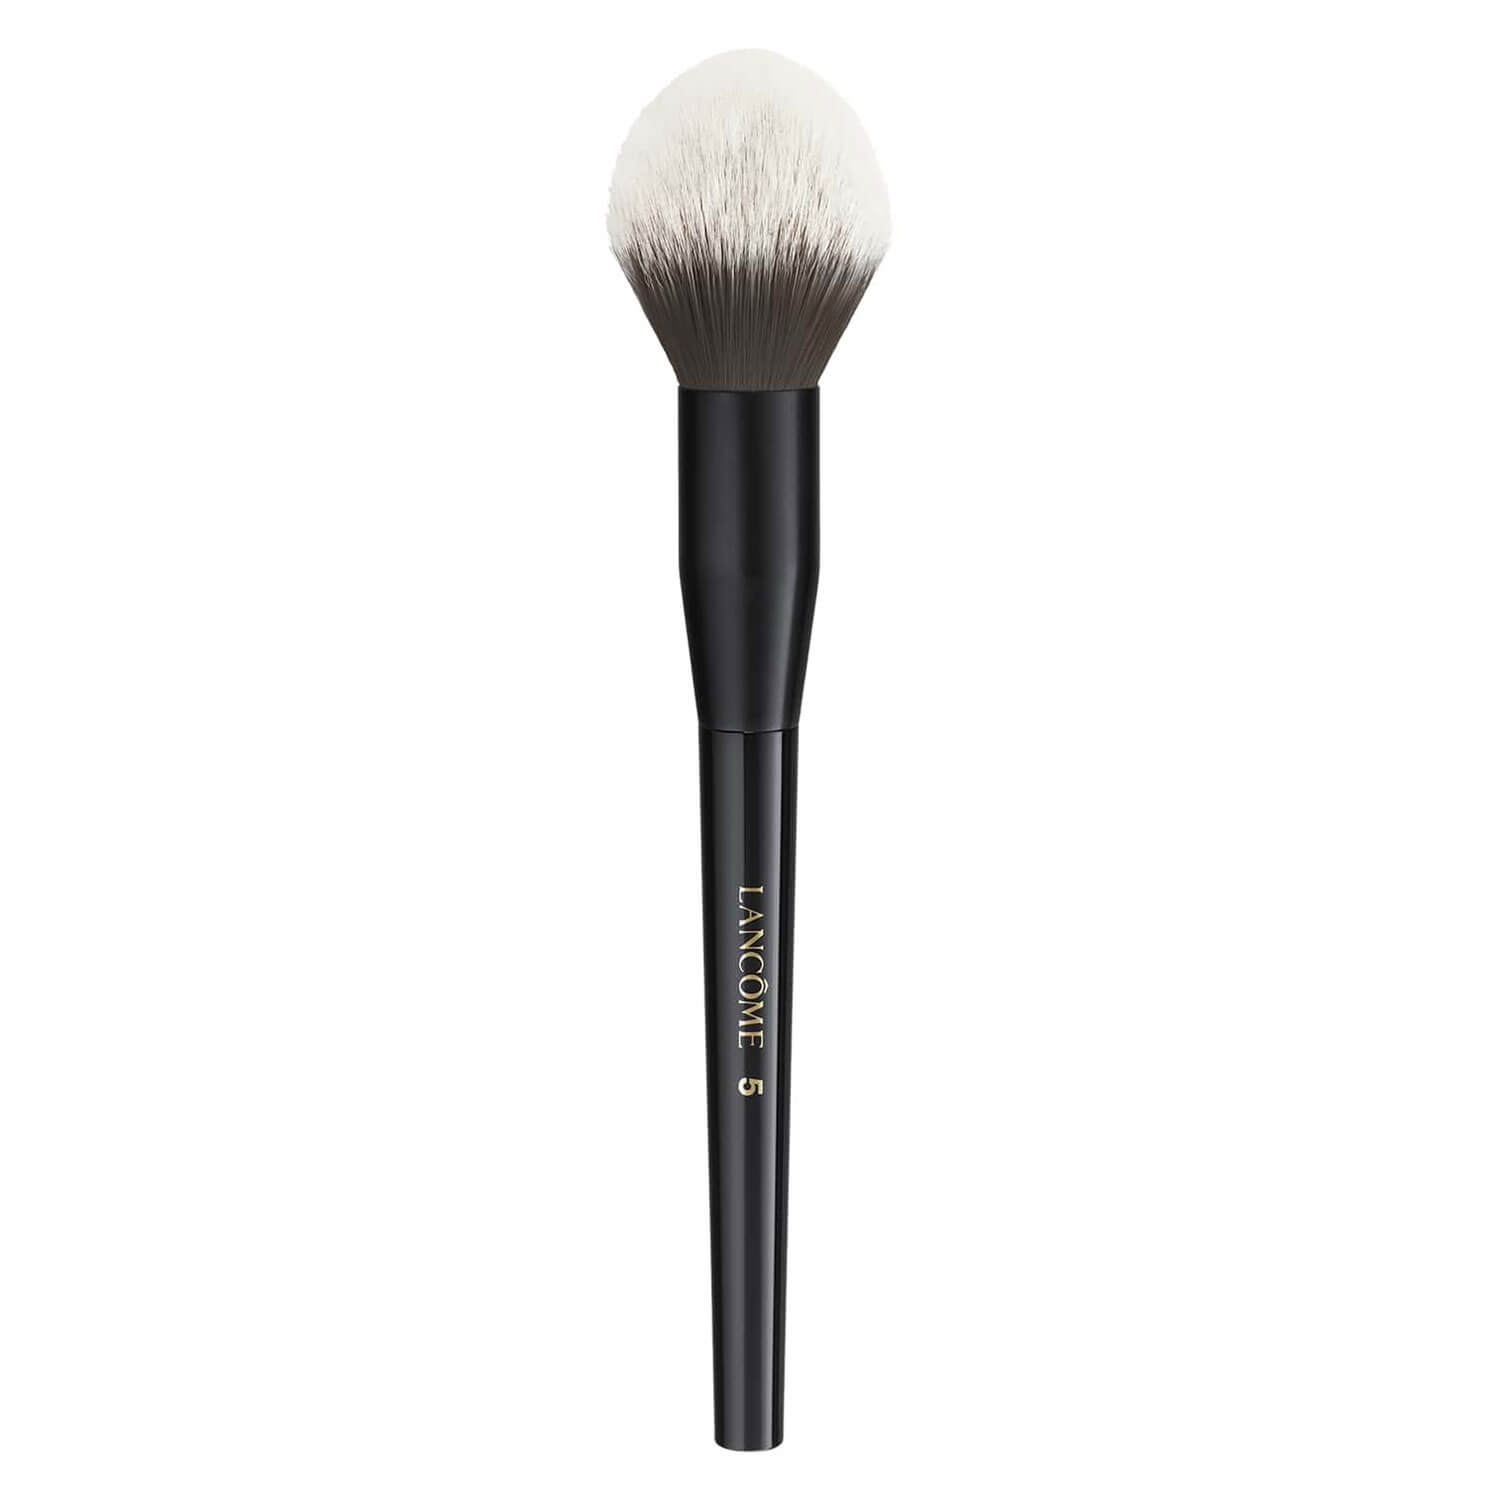 Produktbild von Lancôme Tools - Lush Full Face Powder Brush 05